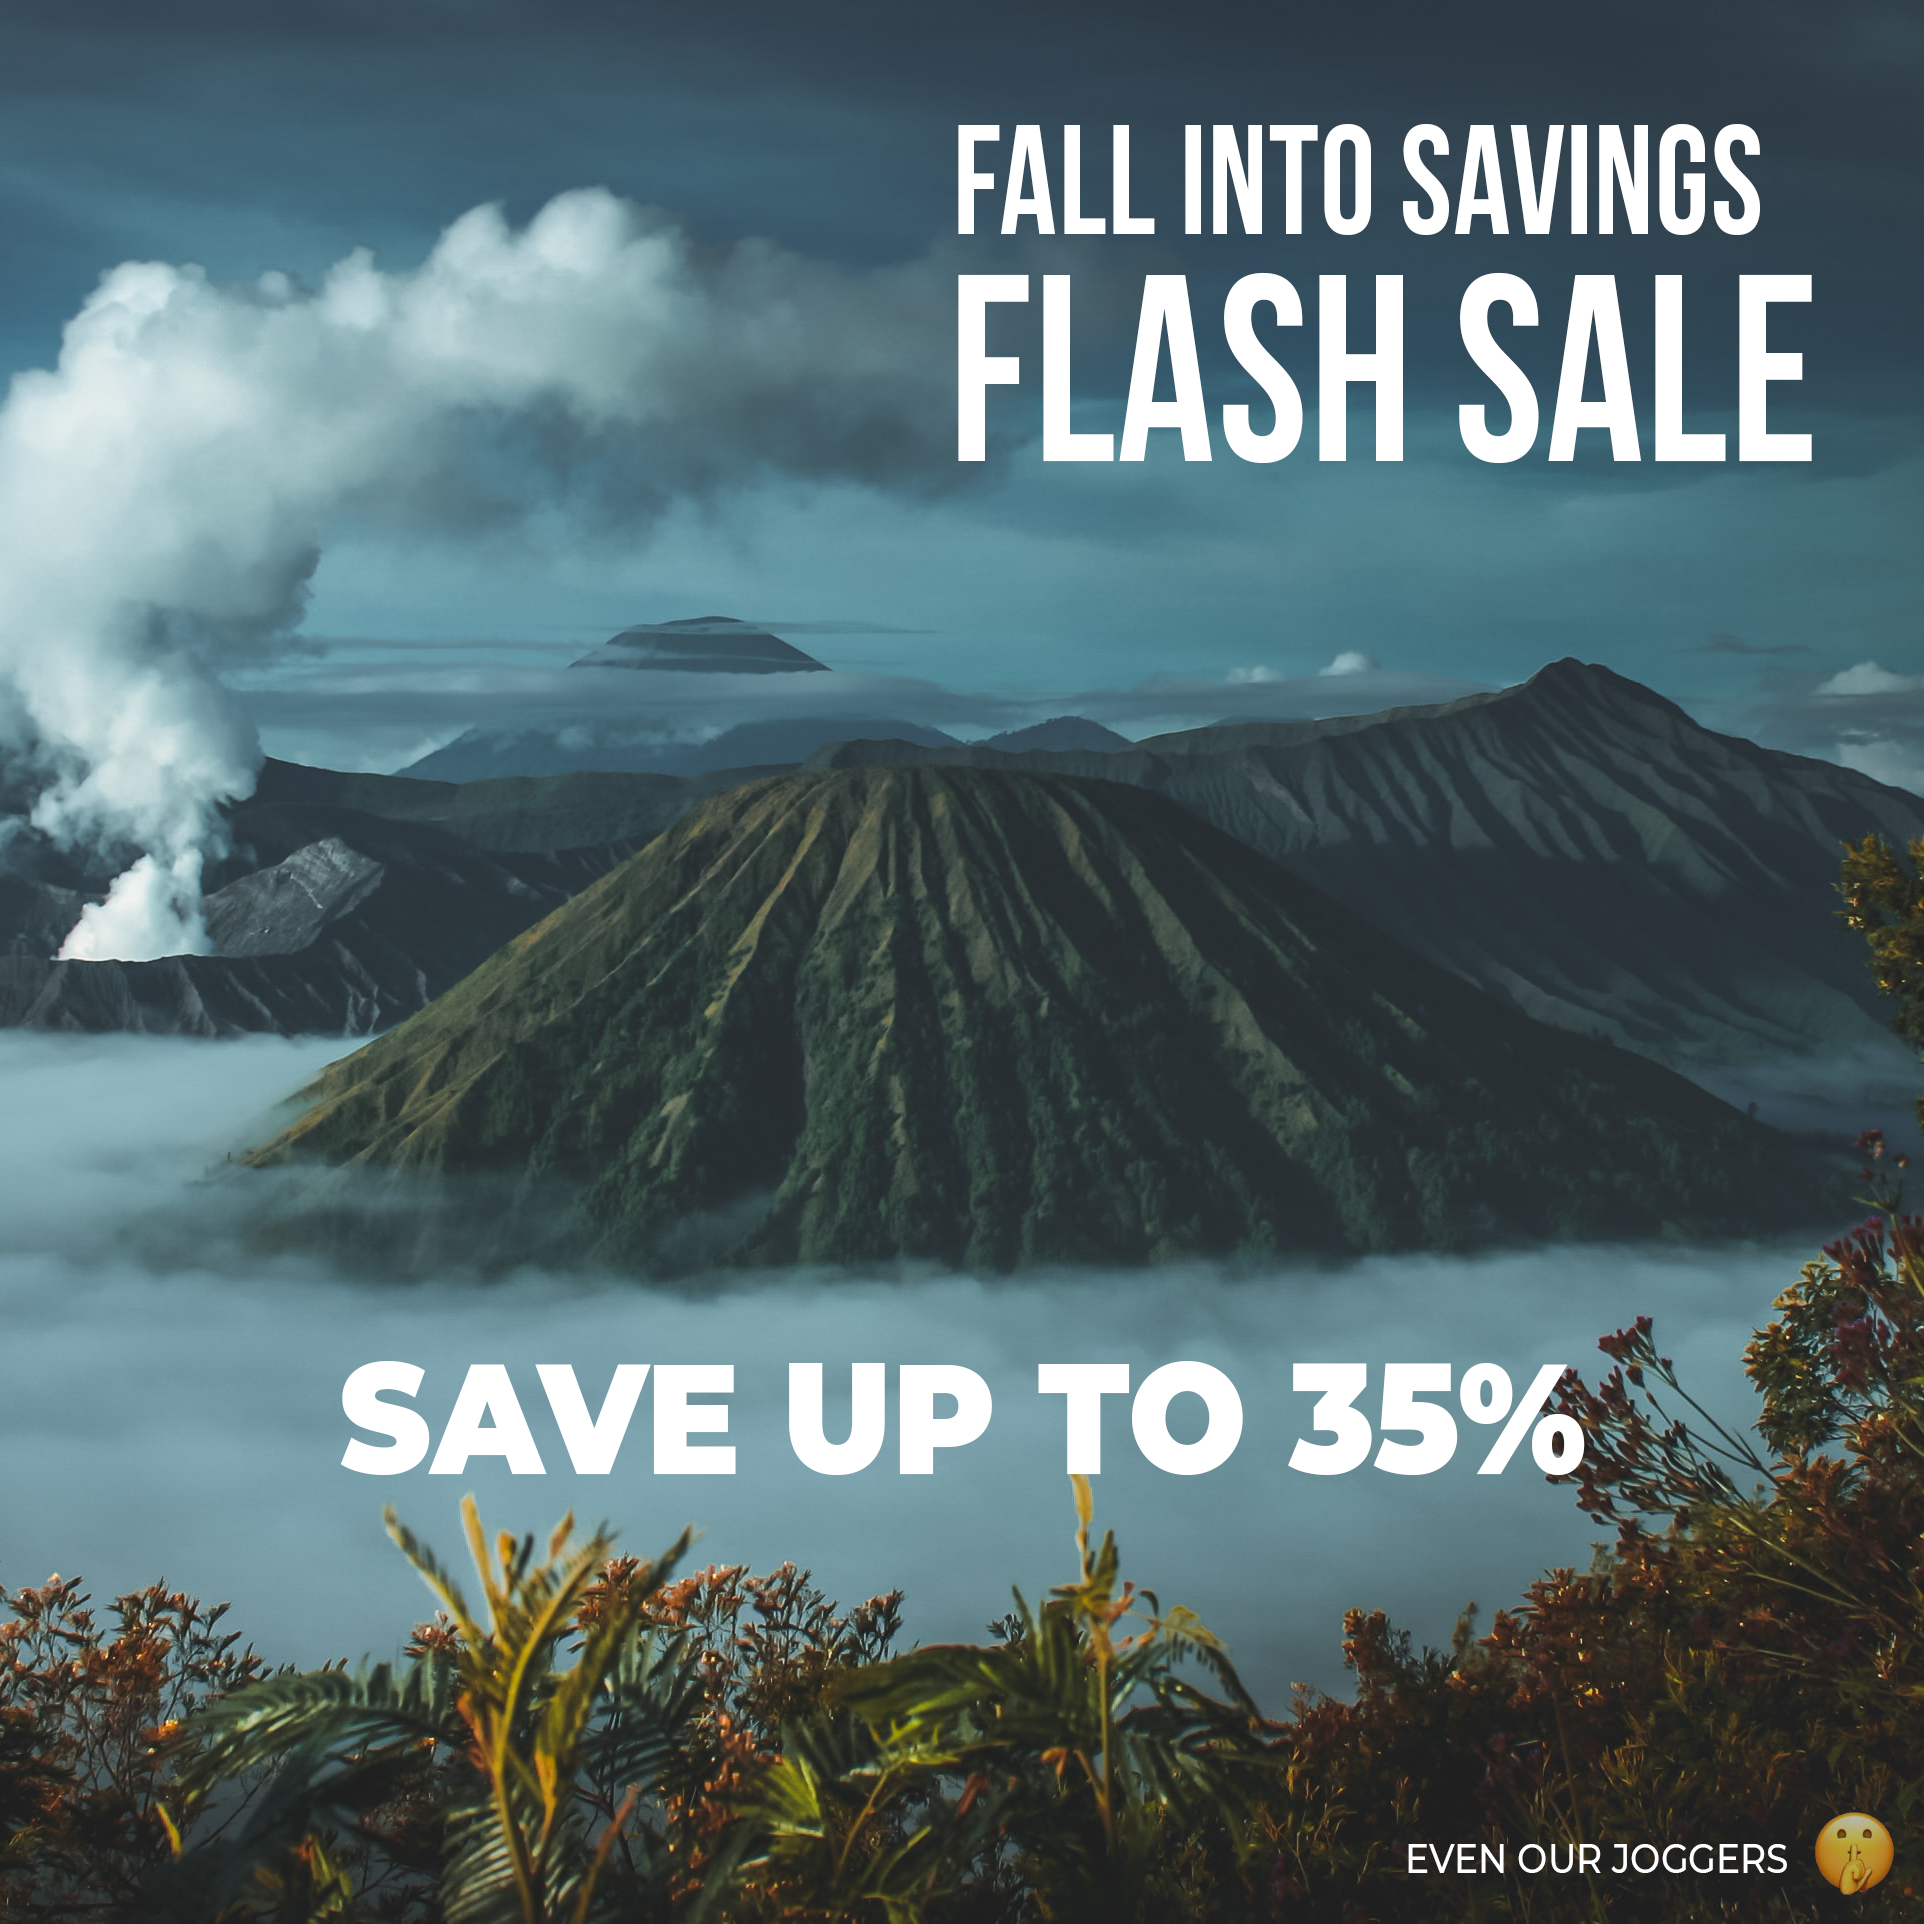 Fall into savings - Flash Sale!